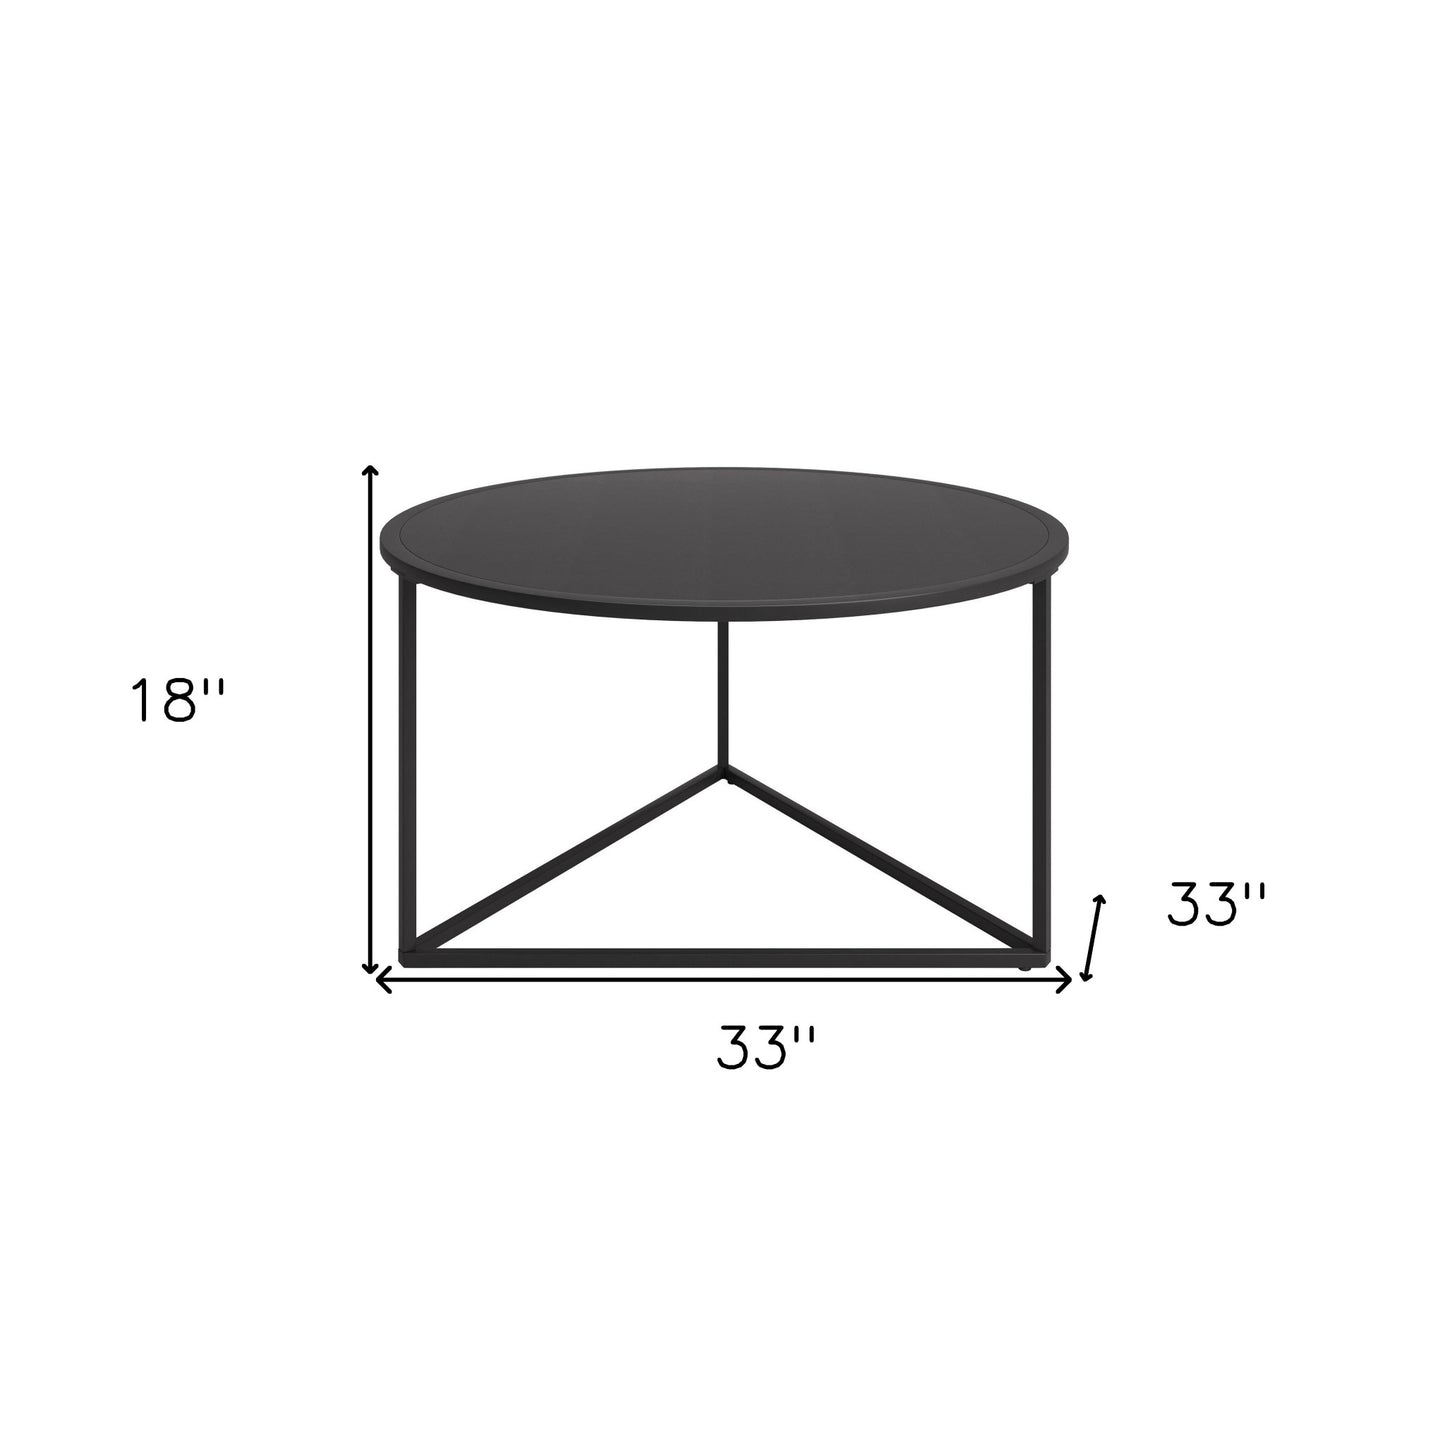 33" Black Steel Round Coffee Table